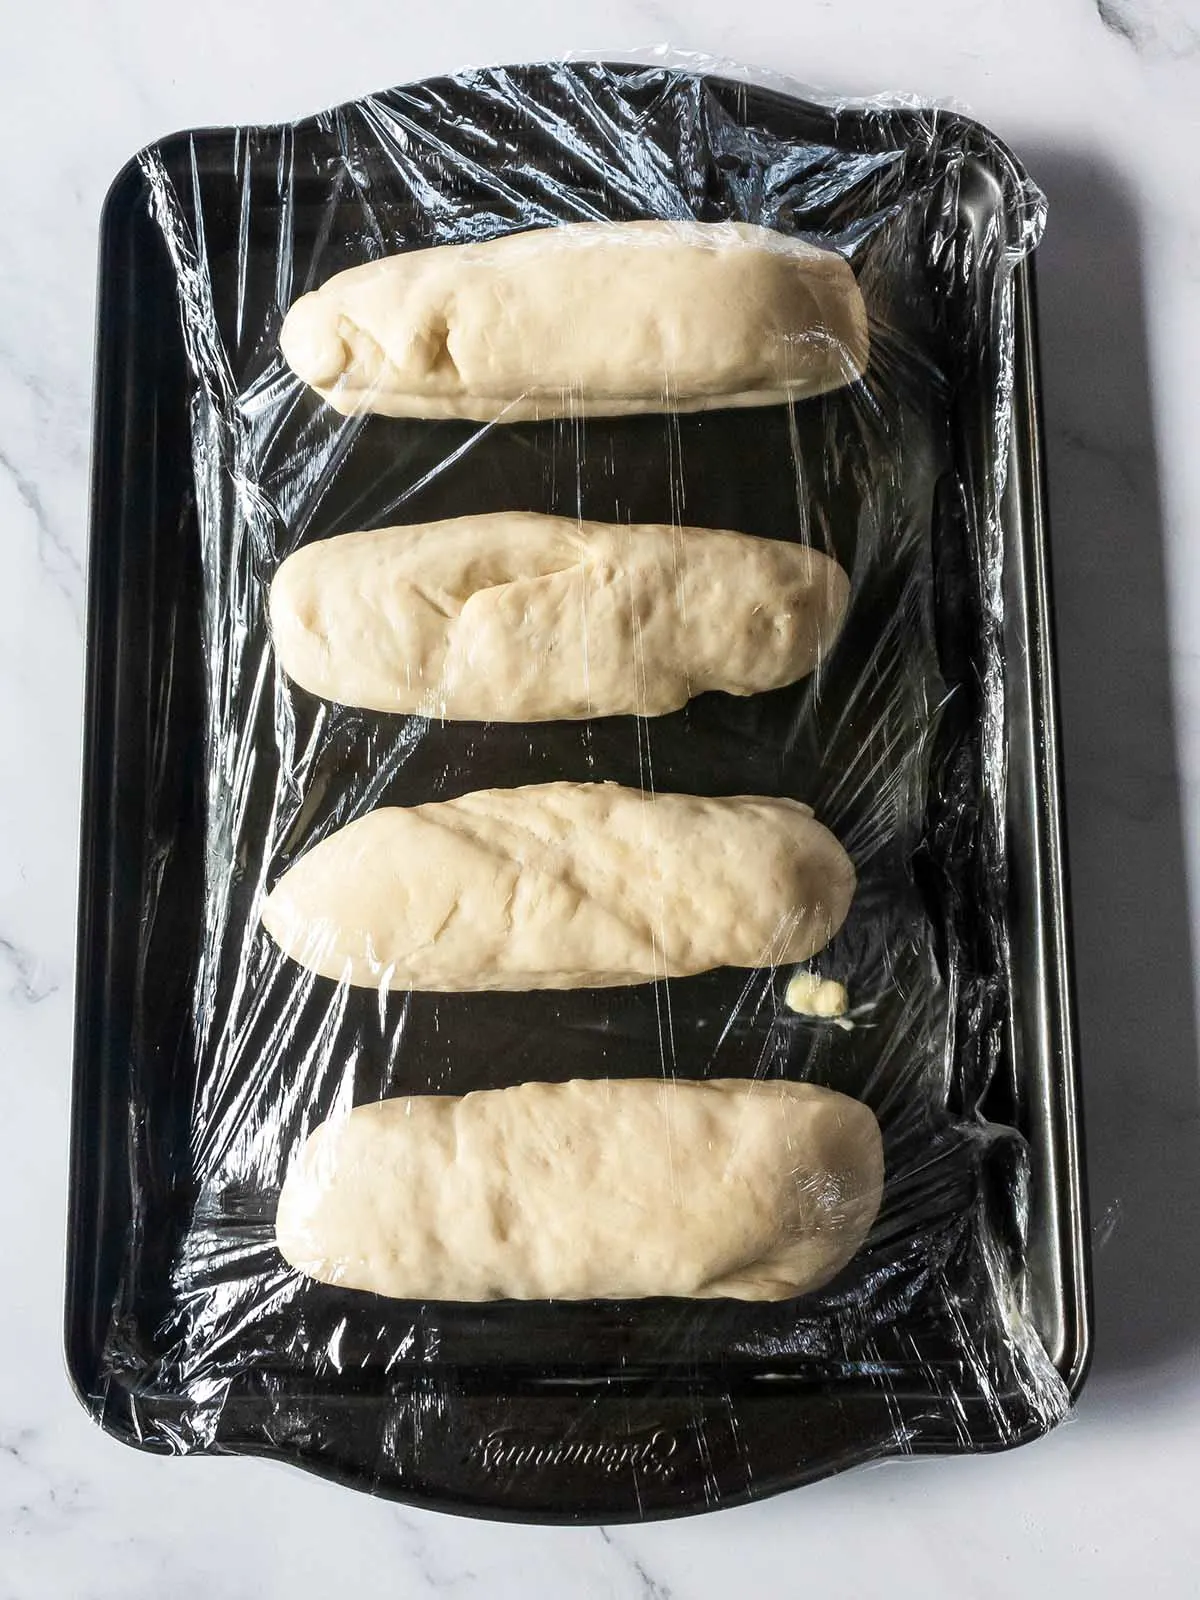 A baking sheet with four Jimmy John's bread on it.